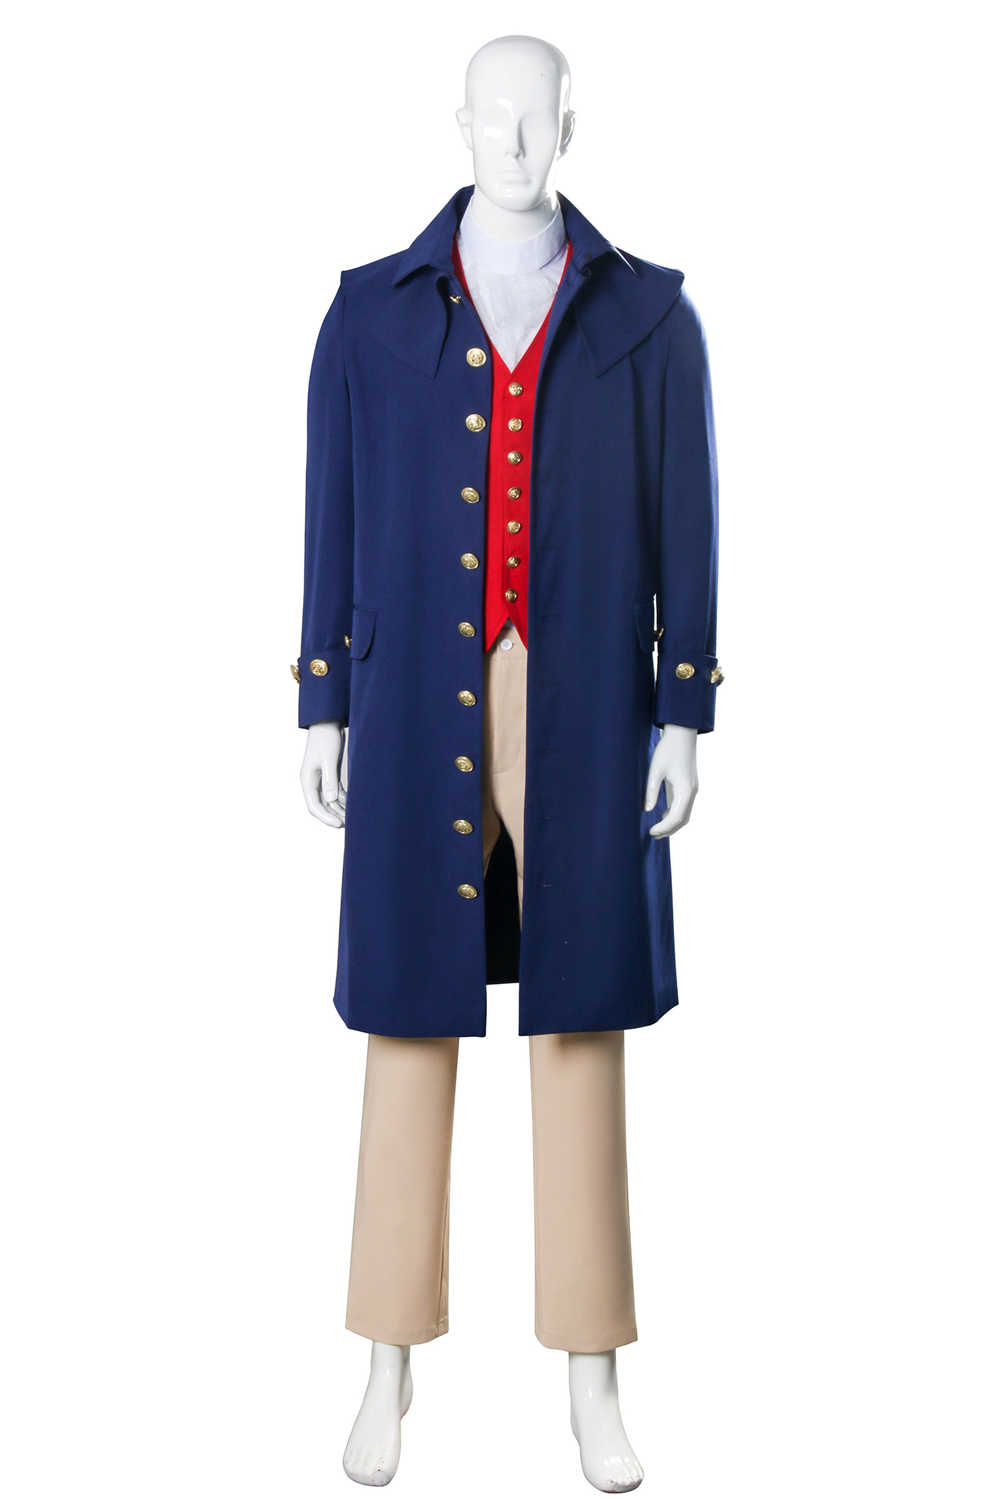 Retro Rush Revere Patriot Costume in Washington Period USA Jacket Skirt Pants Vintage Outfits-Takerlama